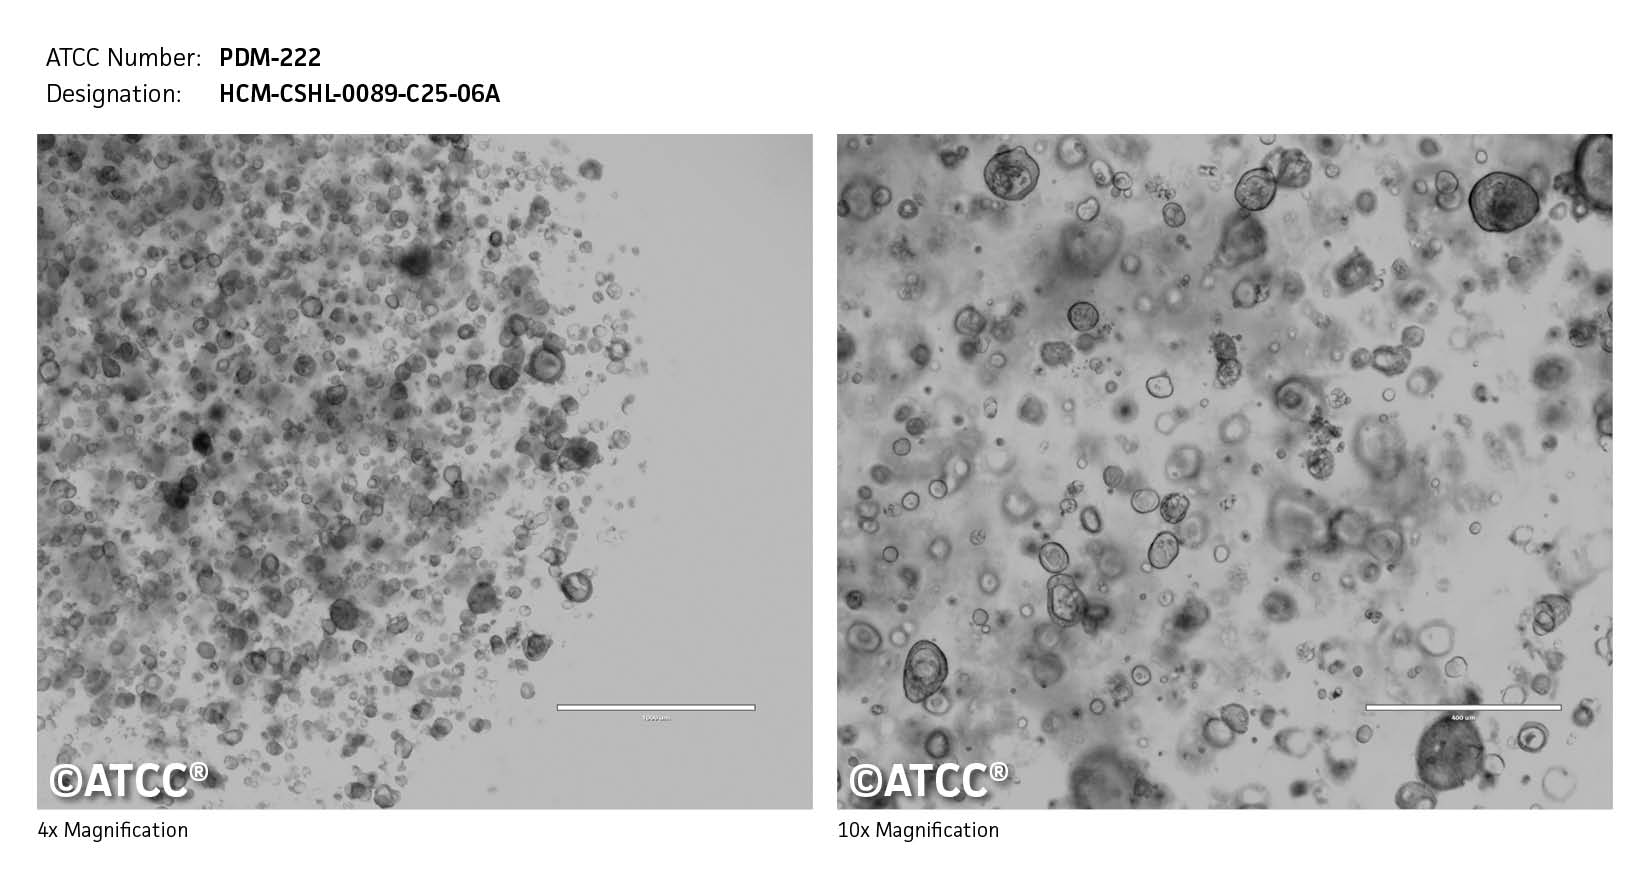 ATCC PDM-222 Cell Micrograph